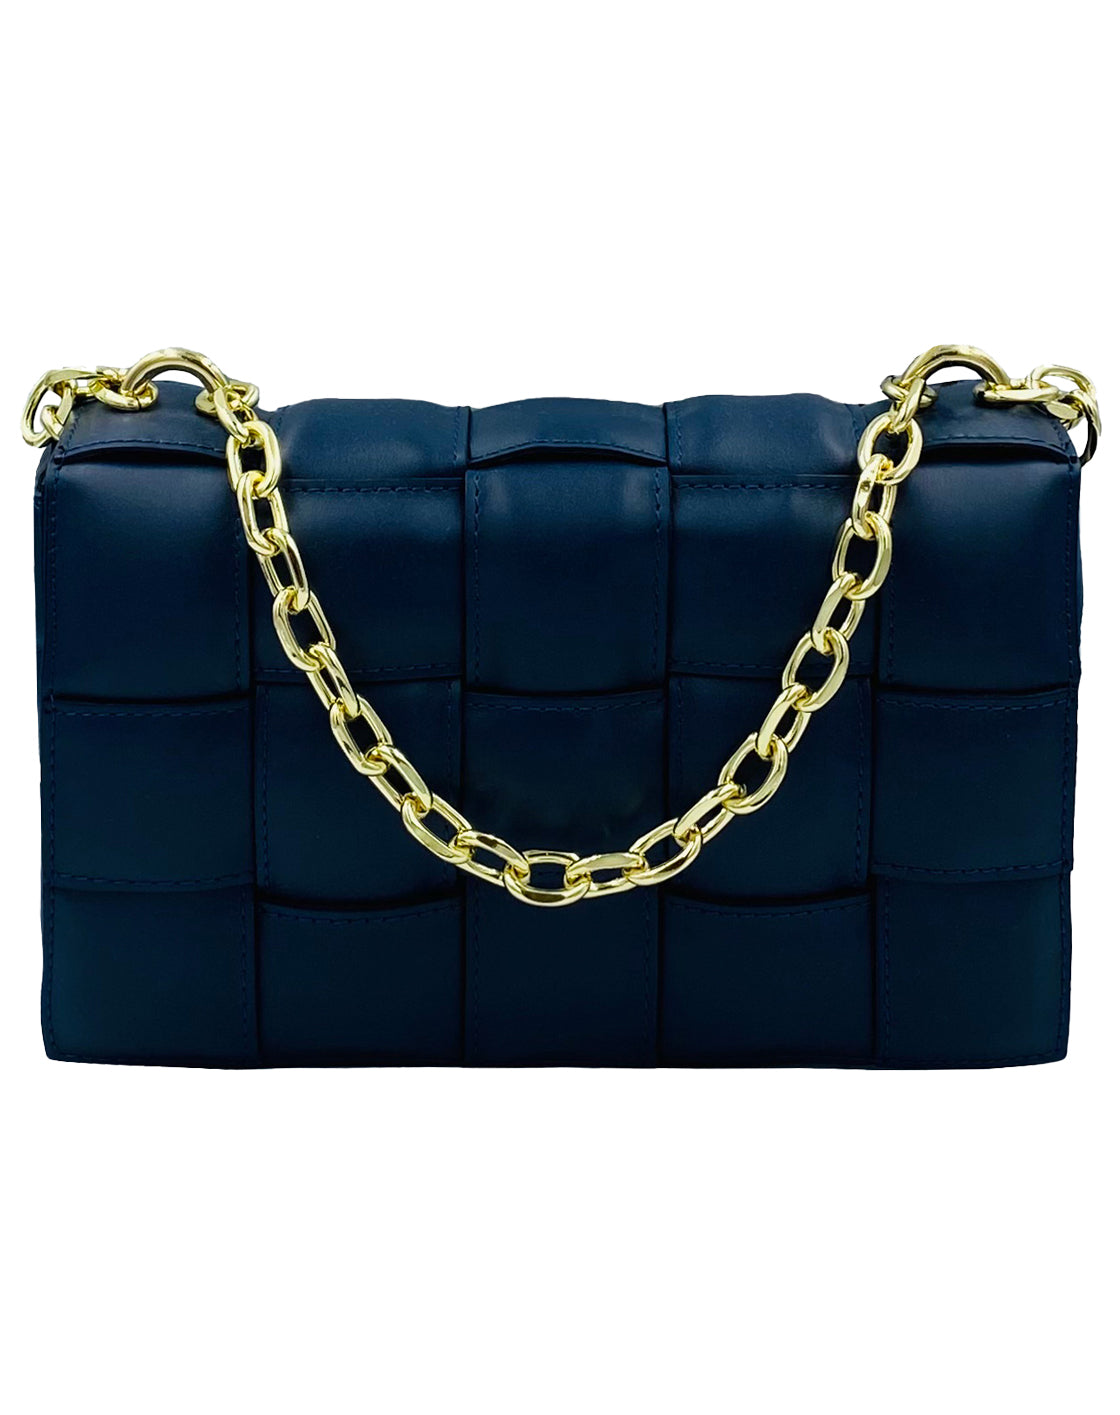 Braided Leather Handbag Navy Blue